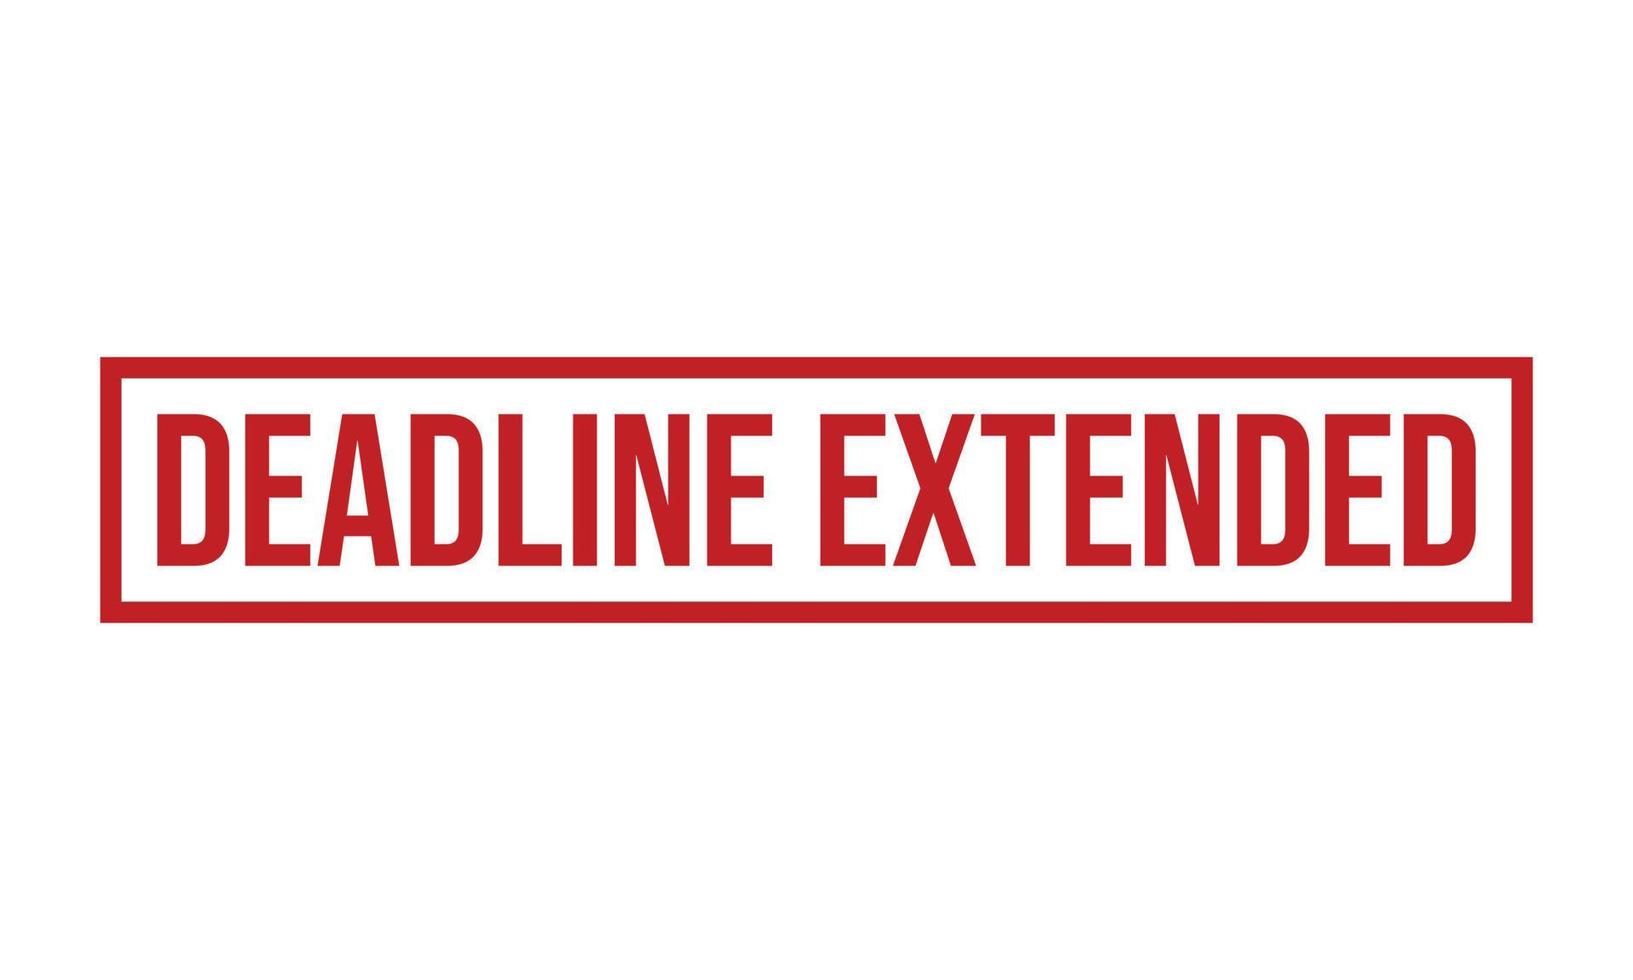 Deadline Extended Rubber Stamp. Deadline Extended Grunge Stamp Seal Vector Illustration